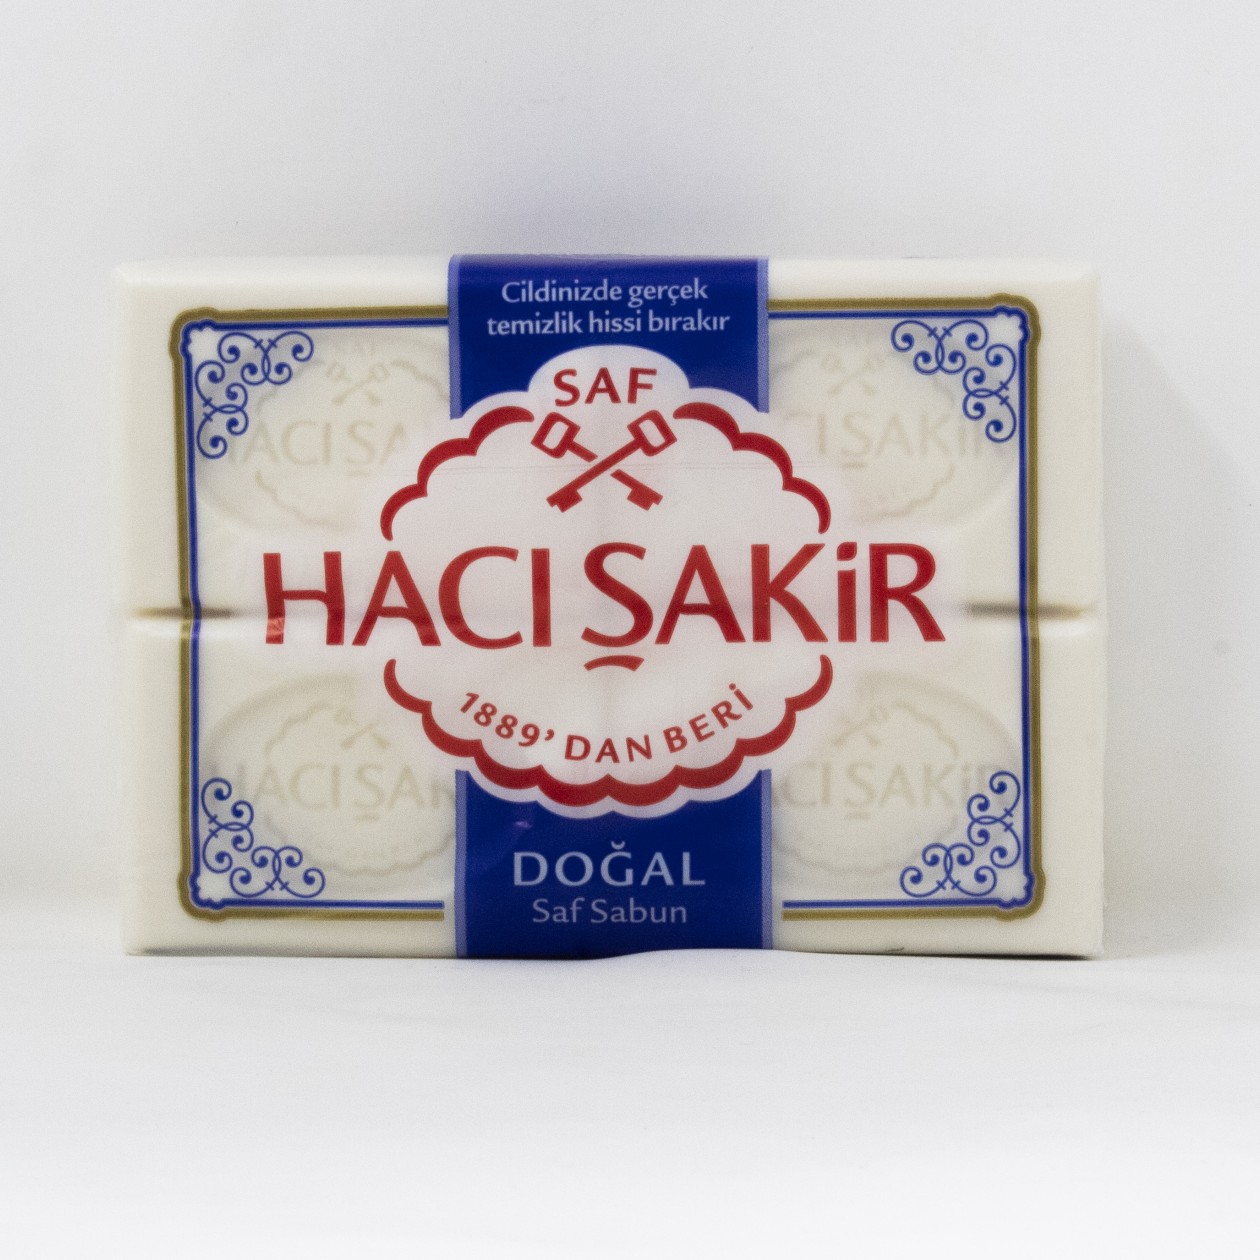 Haci Sakir Natural Mold Soap  4 x 150g